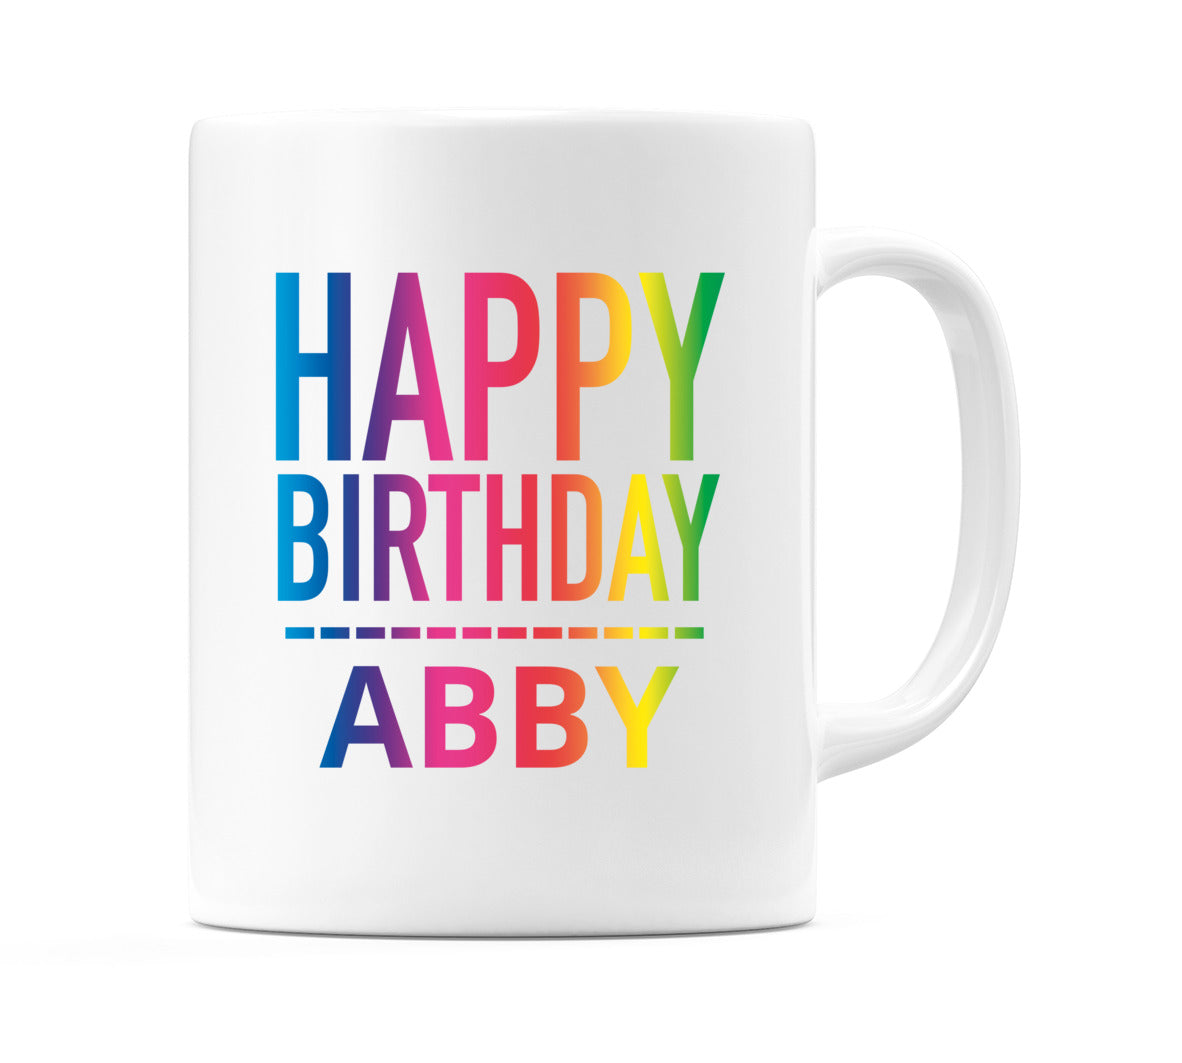 Happy Birthday Abby (Rainbow) Mug Cup by WeDoMugs